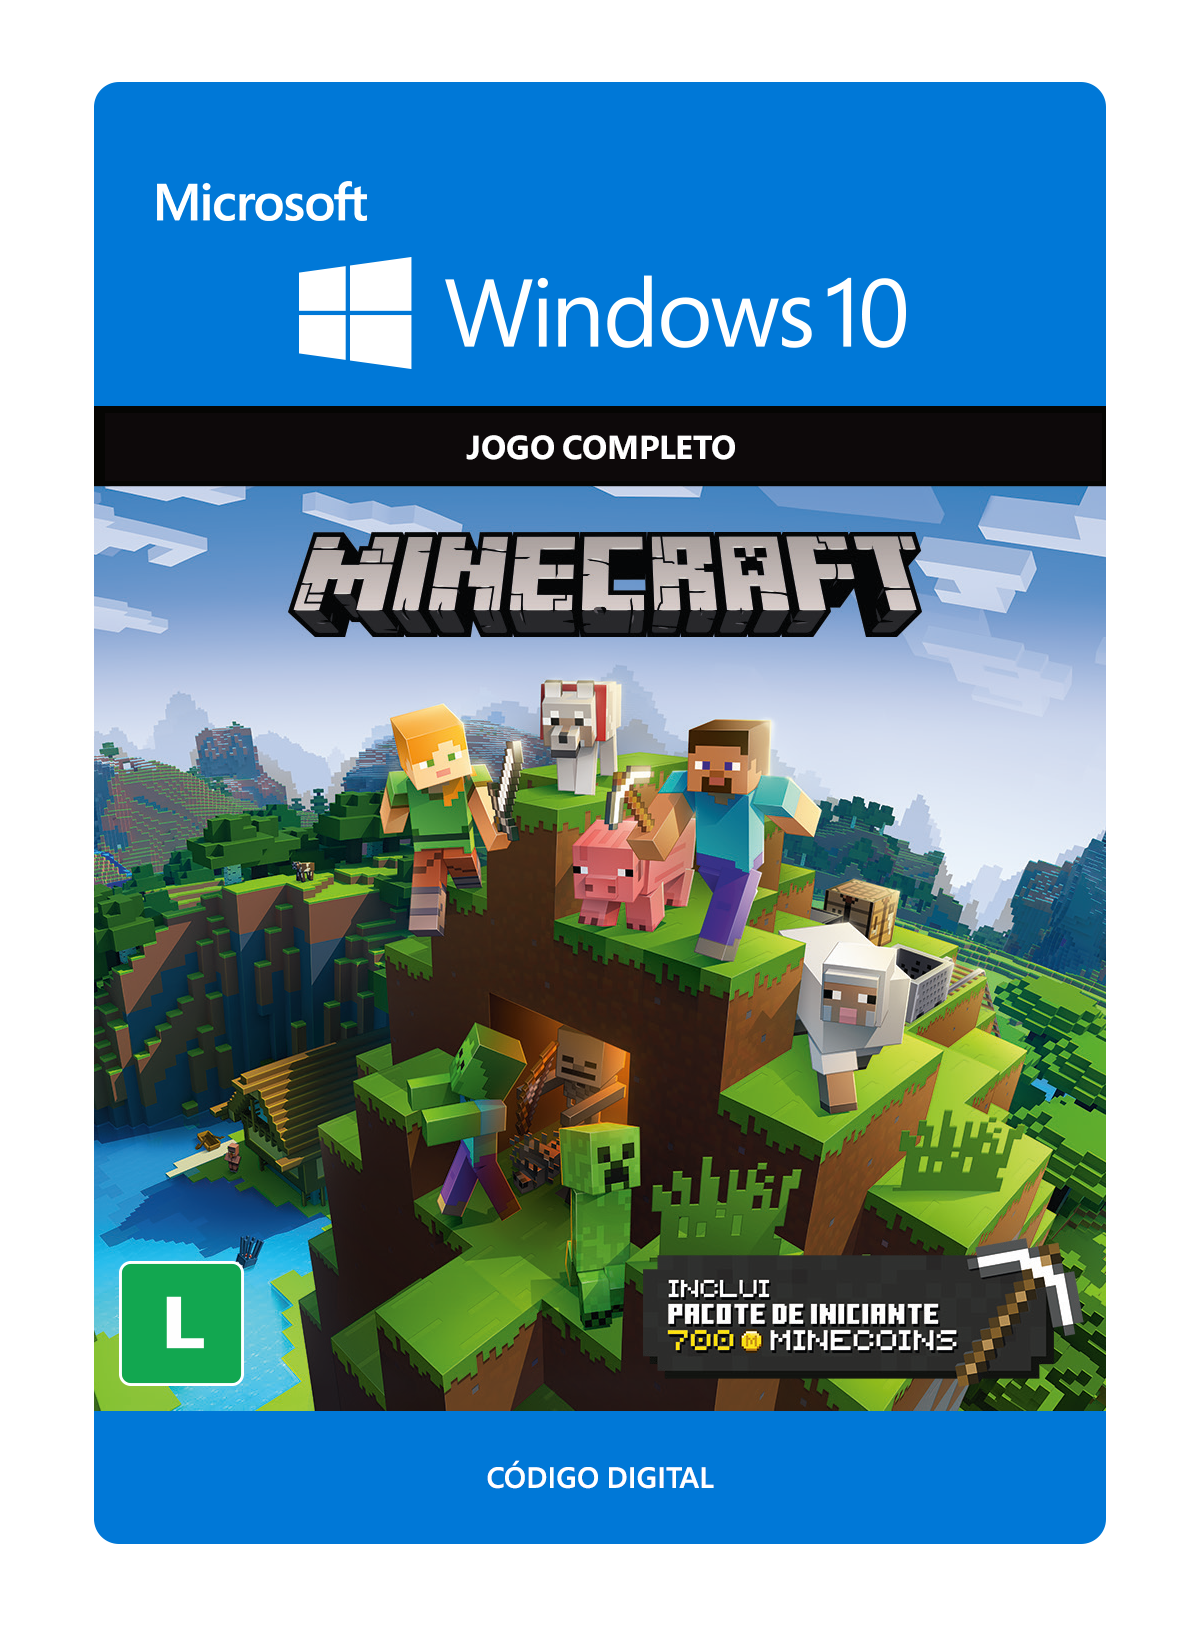 Jogar o Minecraft no Windows 10. - Microsoft Community